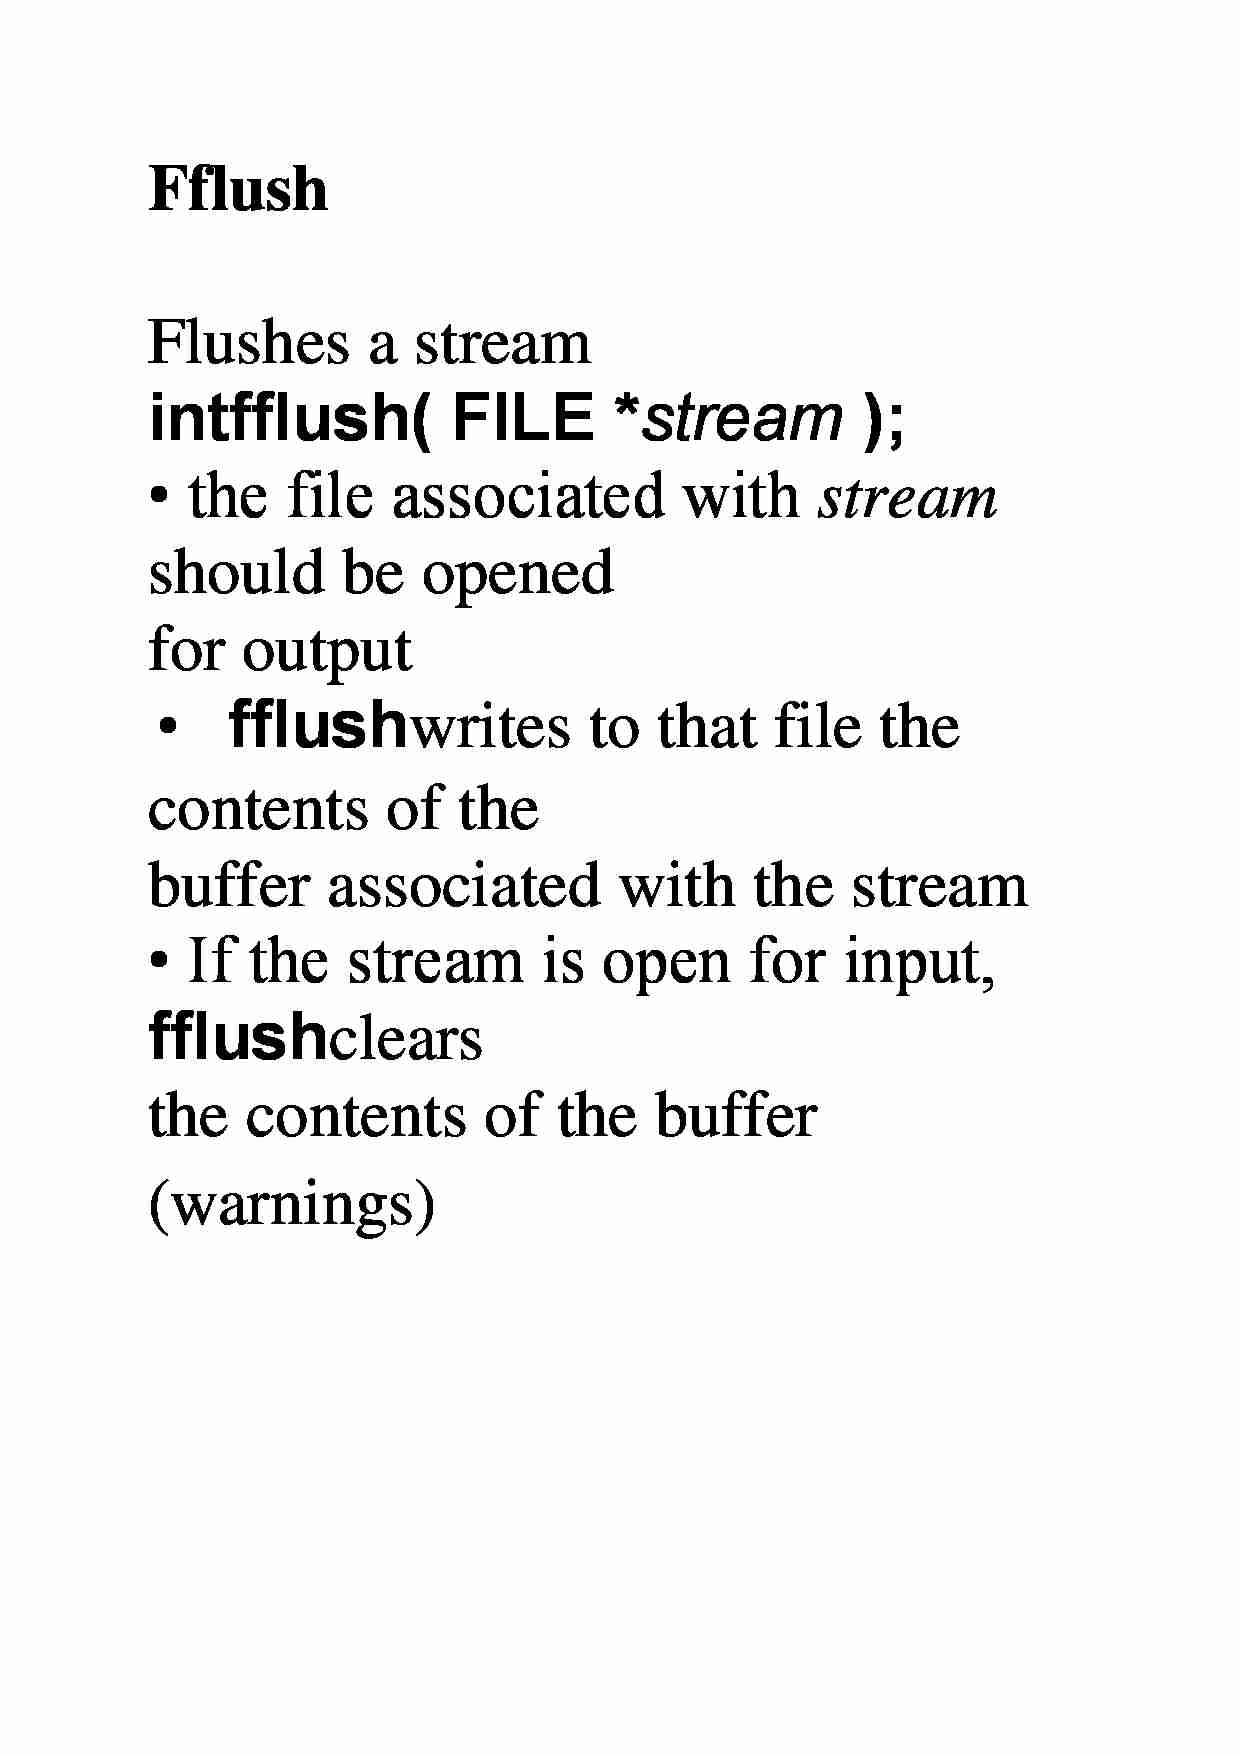 Fflush - examples - strona 1